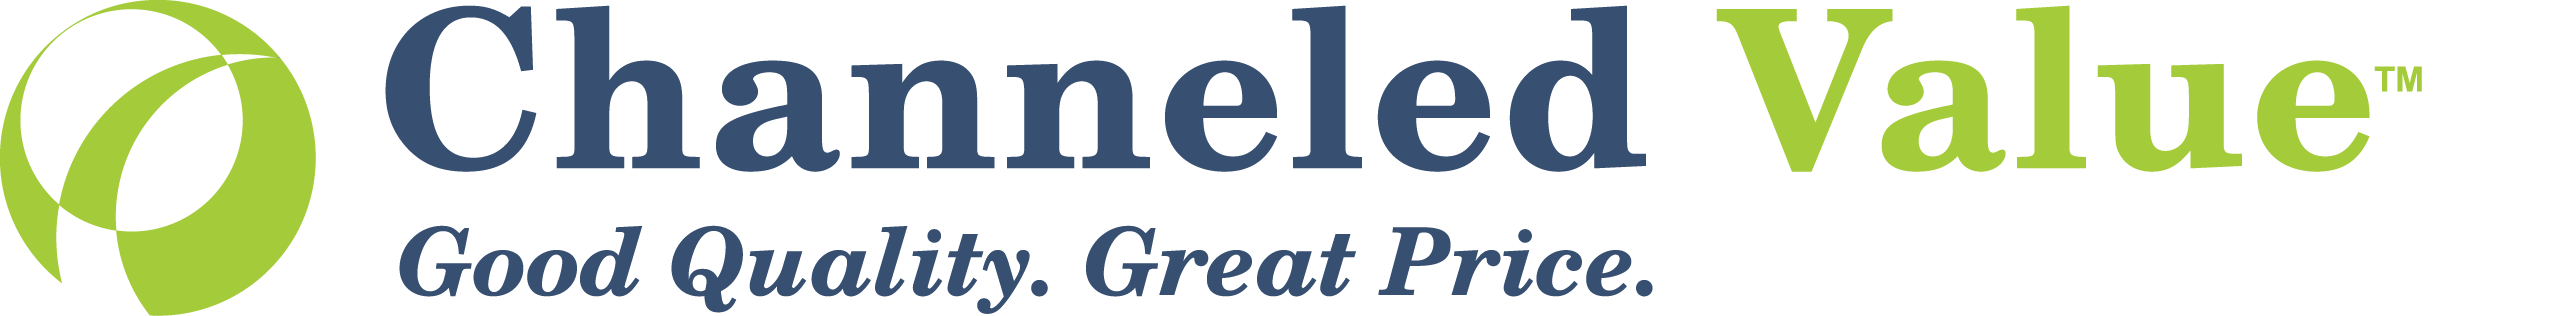 Channeled Value Logo